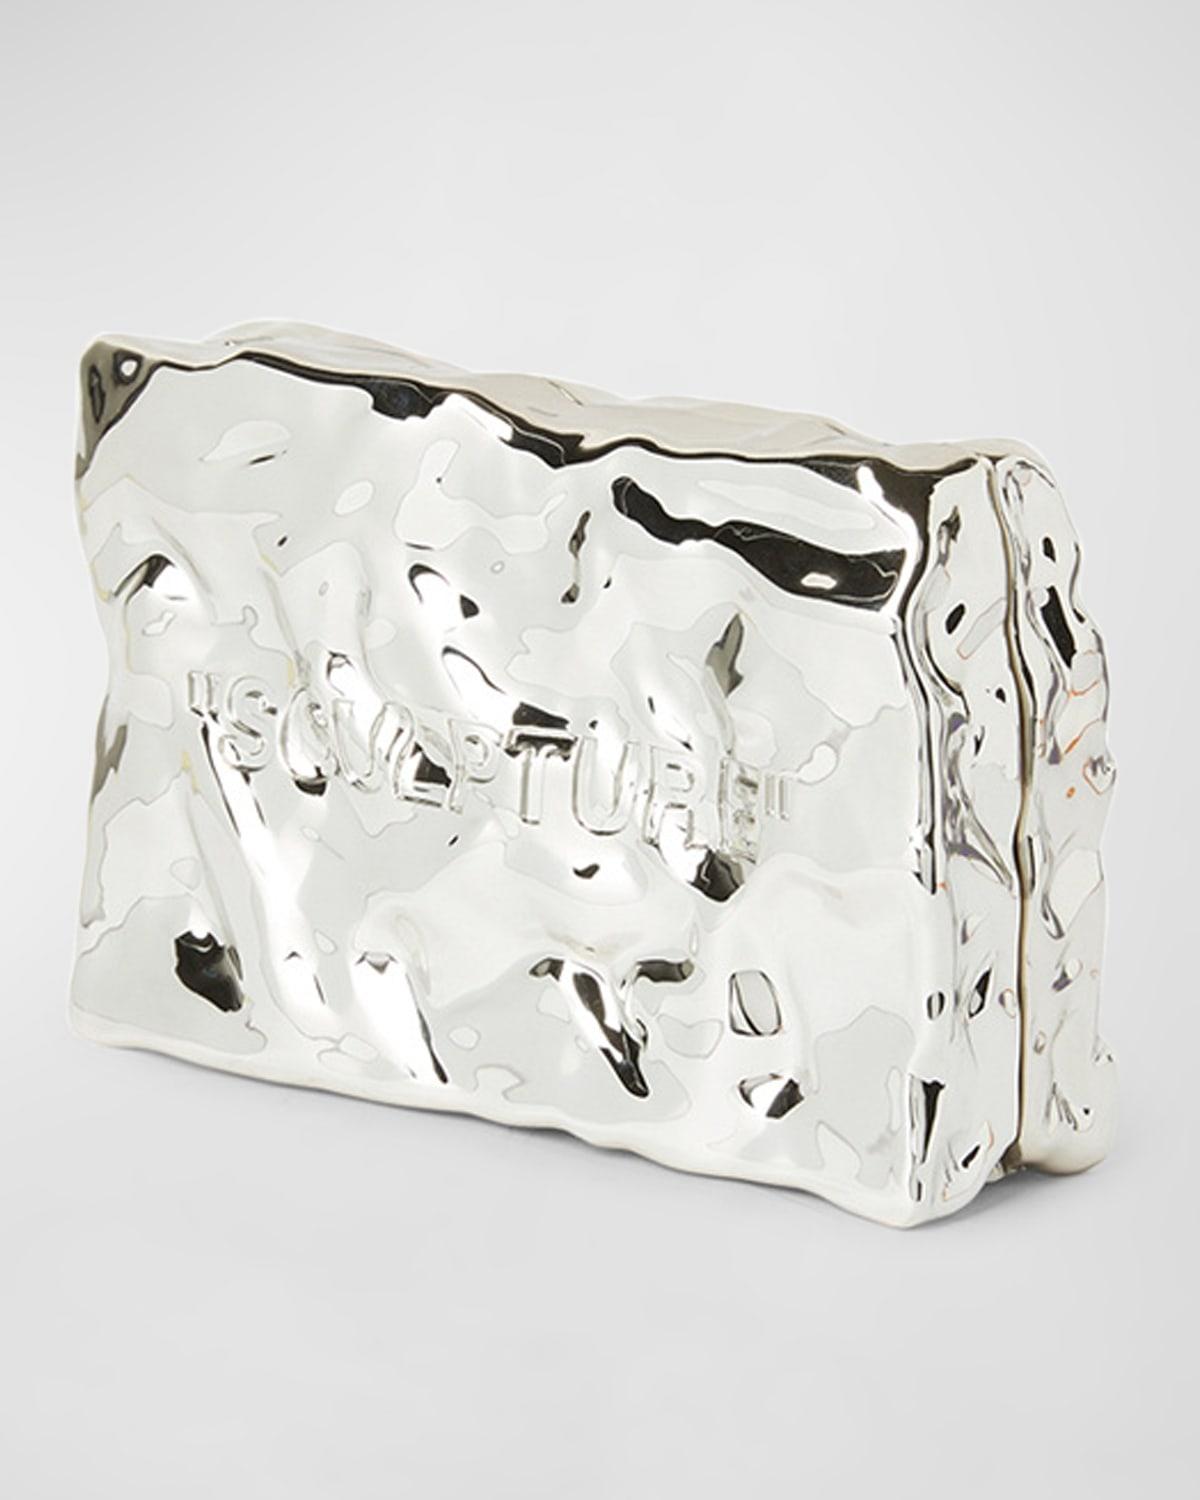 Off-White c/o Virgil Abloh Sculpture Crushed Clutch Bag in Metallic